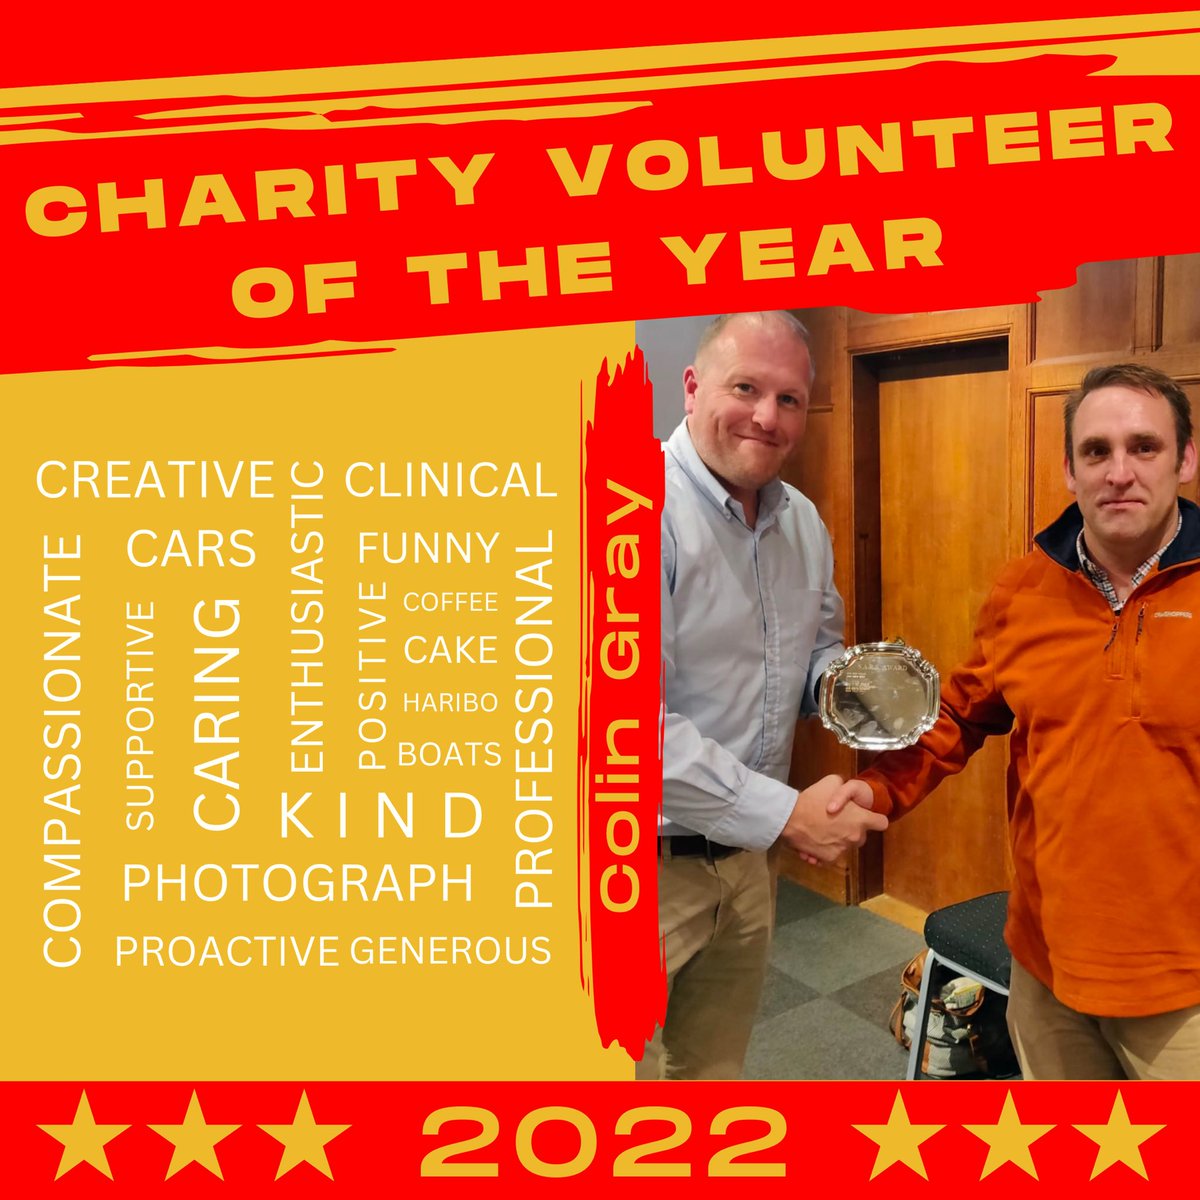 Fantastic achievement for Colin 🤩 #volunteeroftheyear #charity #awards #topman